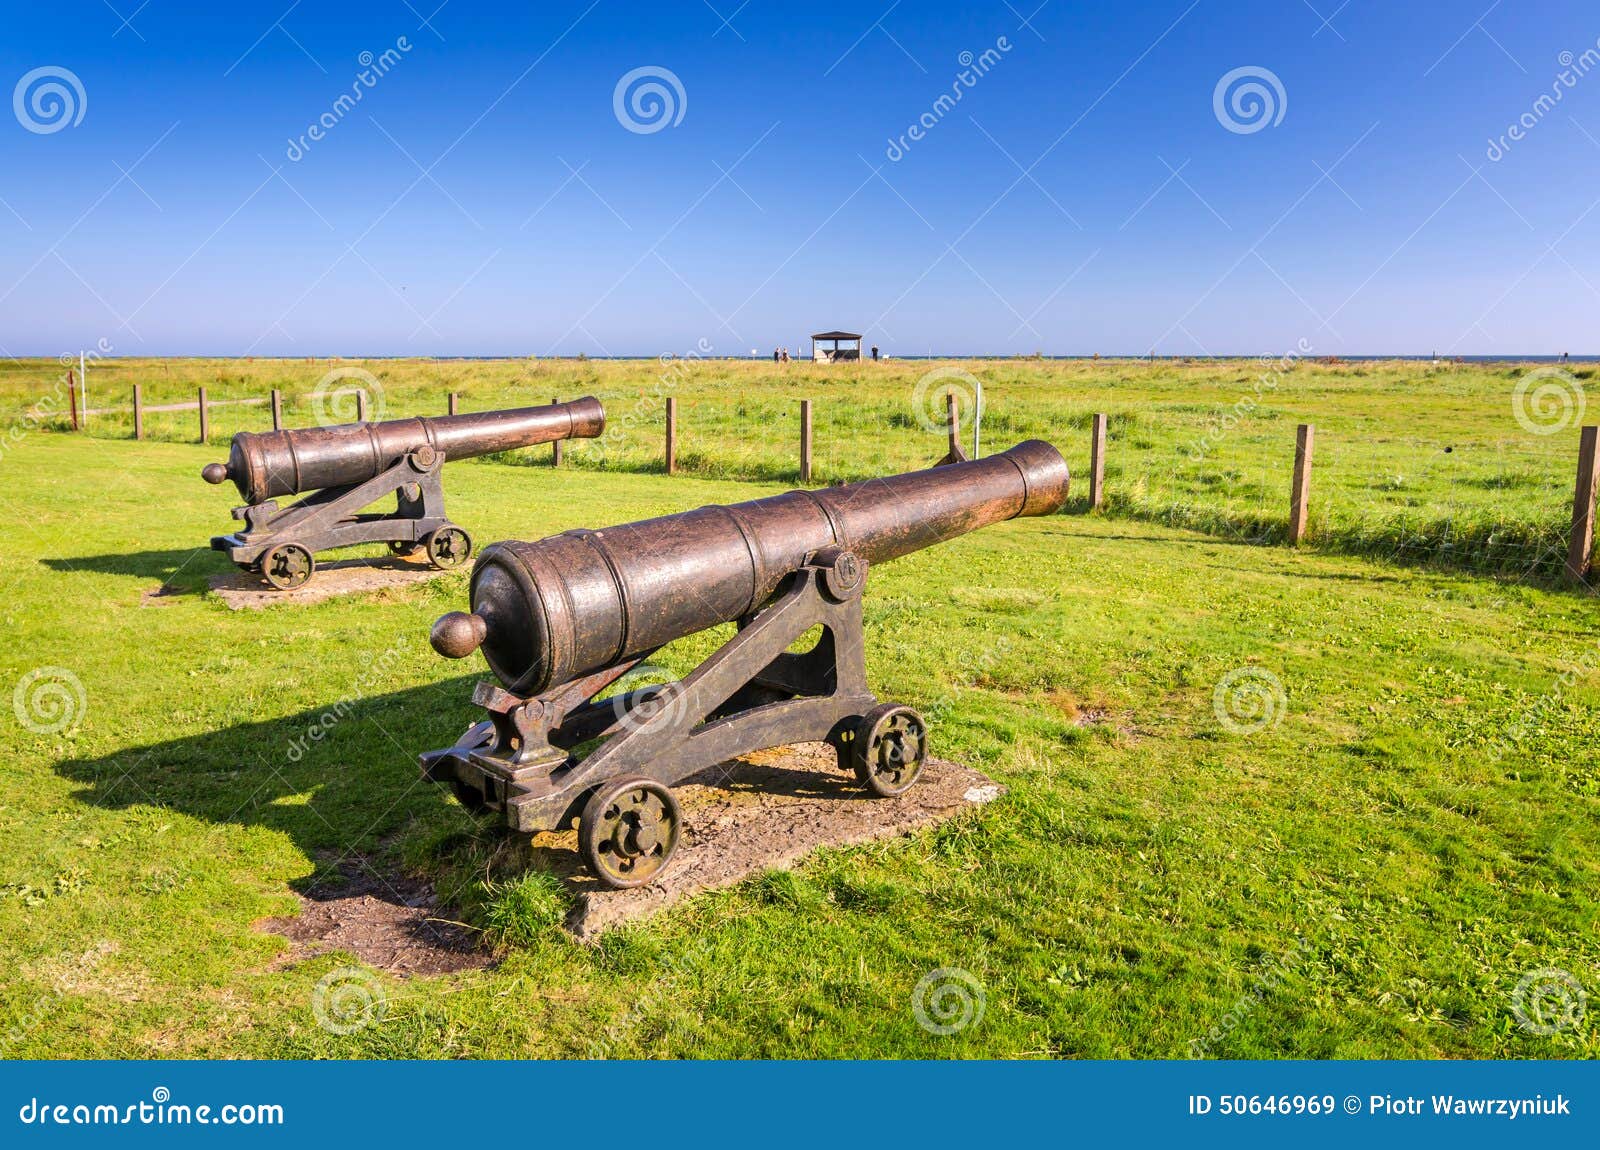 bronze cannons on oland island